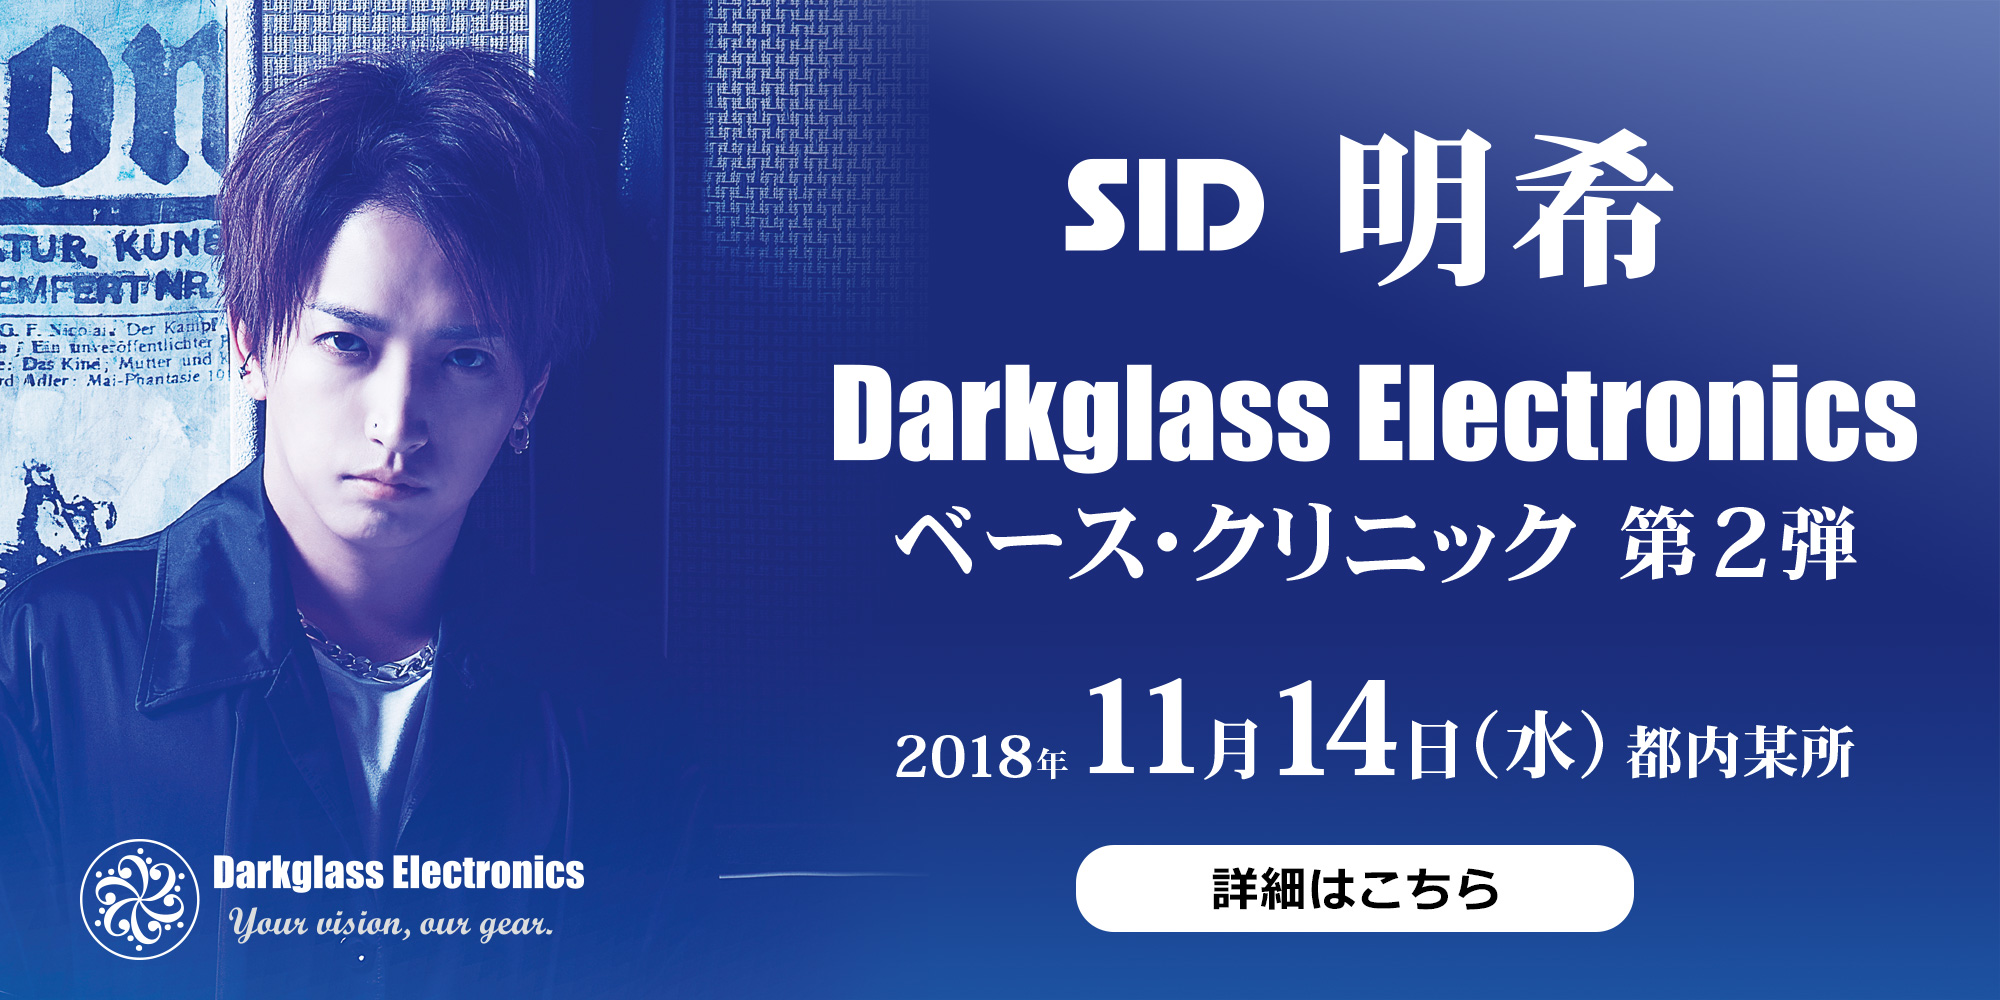 SID 明希 x Darkglass Electronics ベースクリニック第二弾